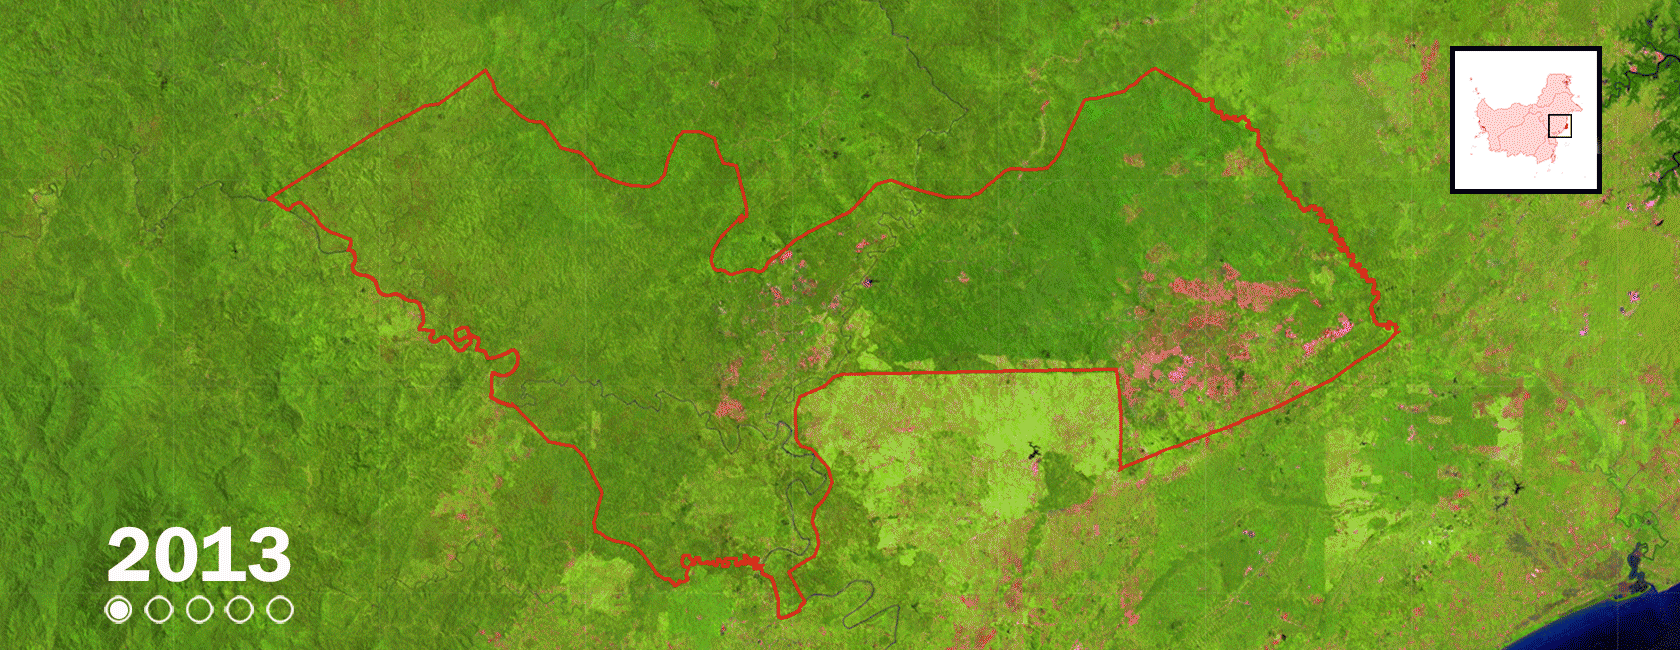 Deforestasi 2013-2017 di konsesi HTI PT Fajar Surya Swadaya (FSS), anak usaha Djarum Grup. Banyak daerah yang pada 2013 berupa hutan (warna hijau) dihabisi pada 2014-2017 (warna ungu). 2018 ©Landsat.